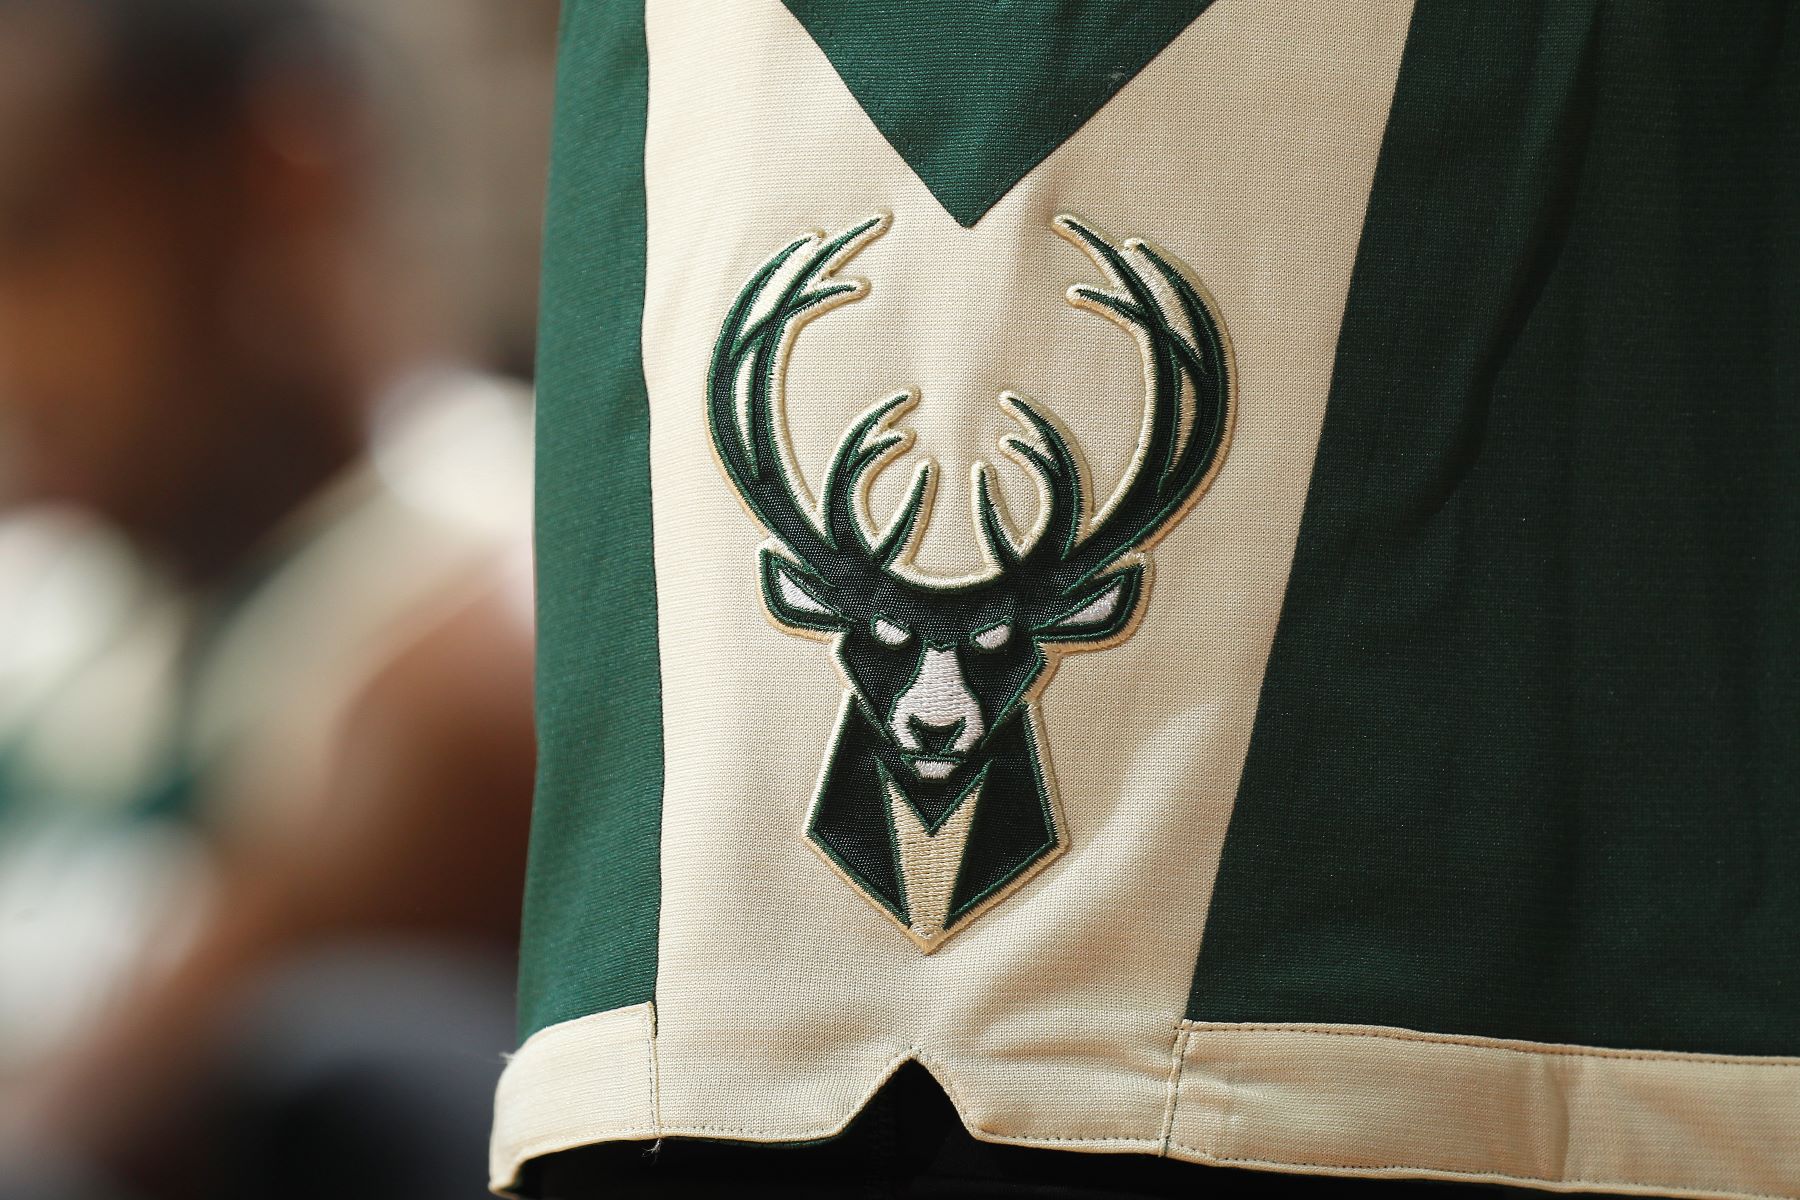 NBA team Milwaukee Bucks logo seen on the uniform shorts during a game against the Cleveland Cavaliers